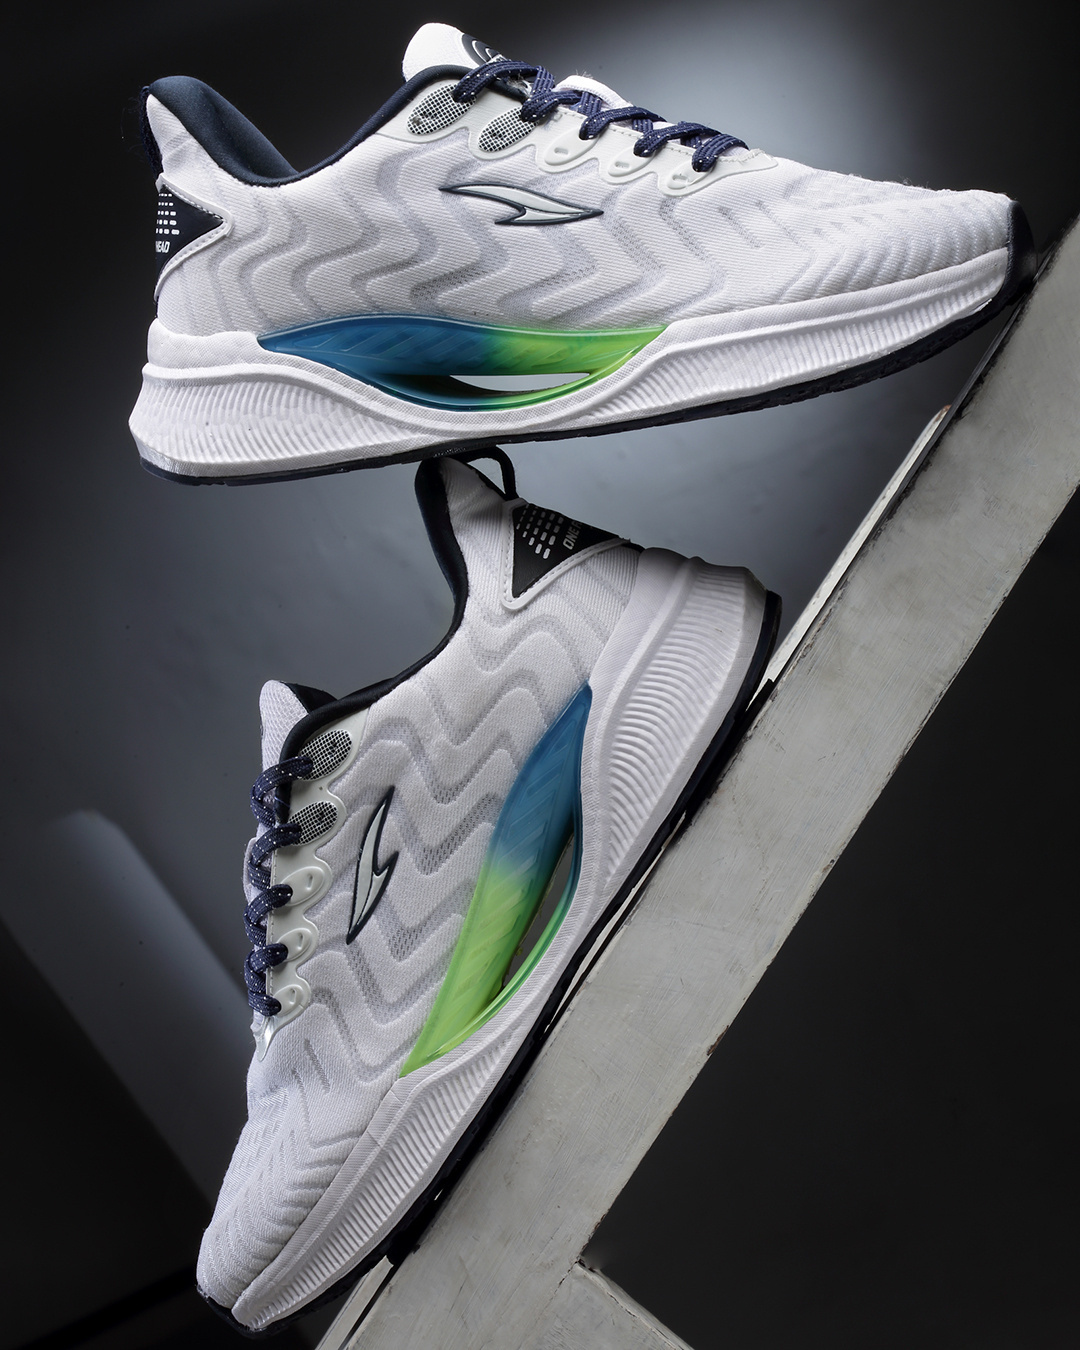 Buy Men's White Running Shoes Online in India at Bewakoof